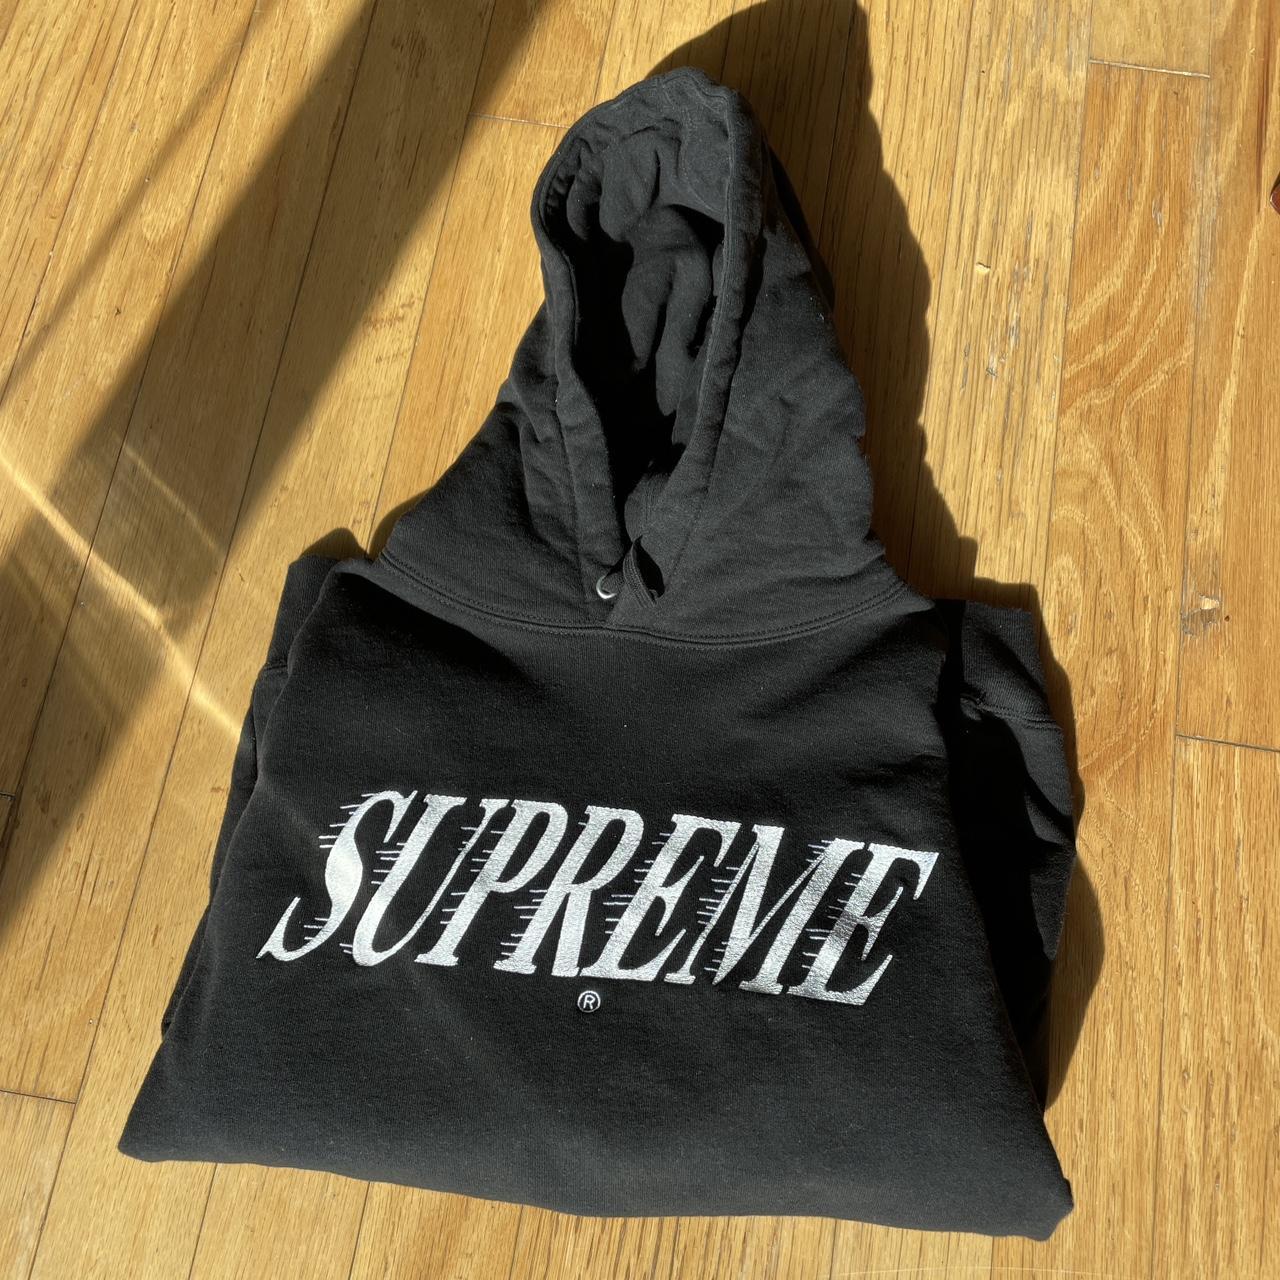 Supreme Crossover Hooded Sweatshirt, Purchased on...